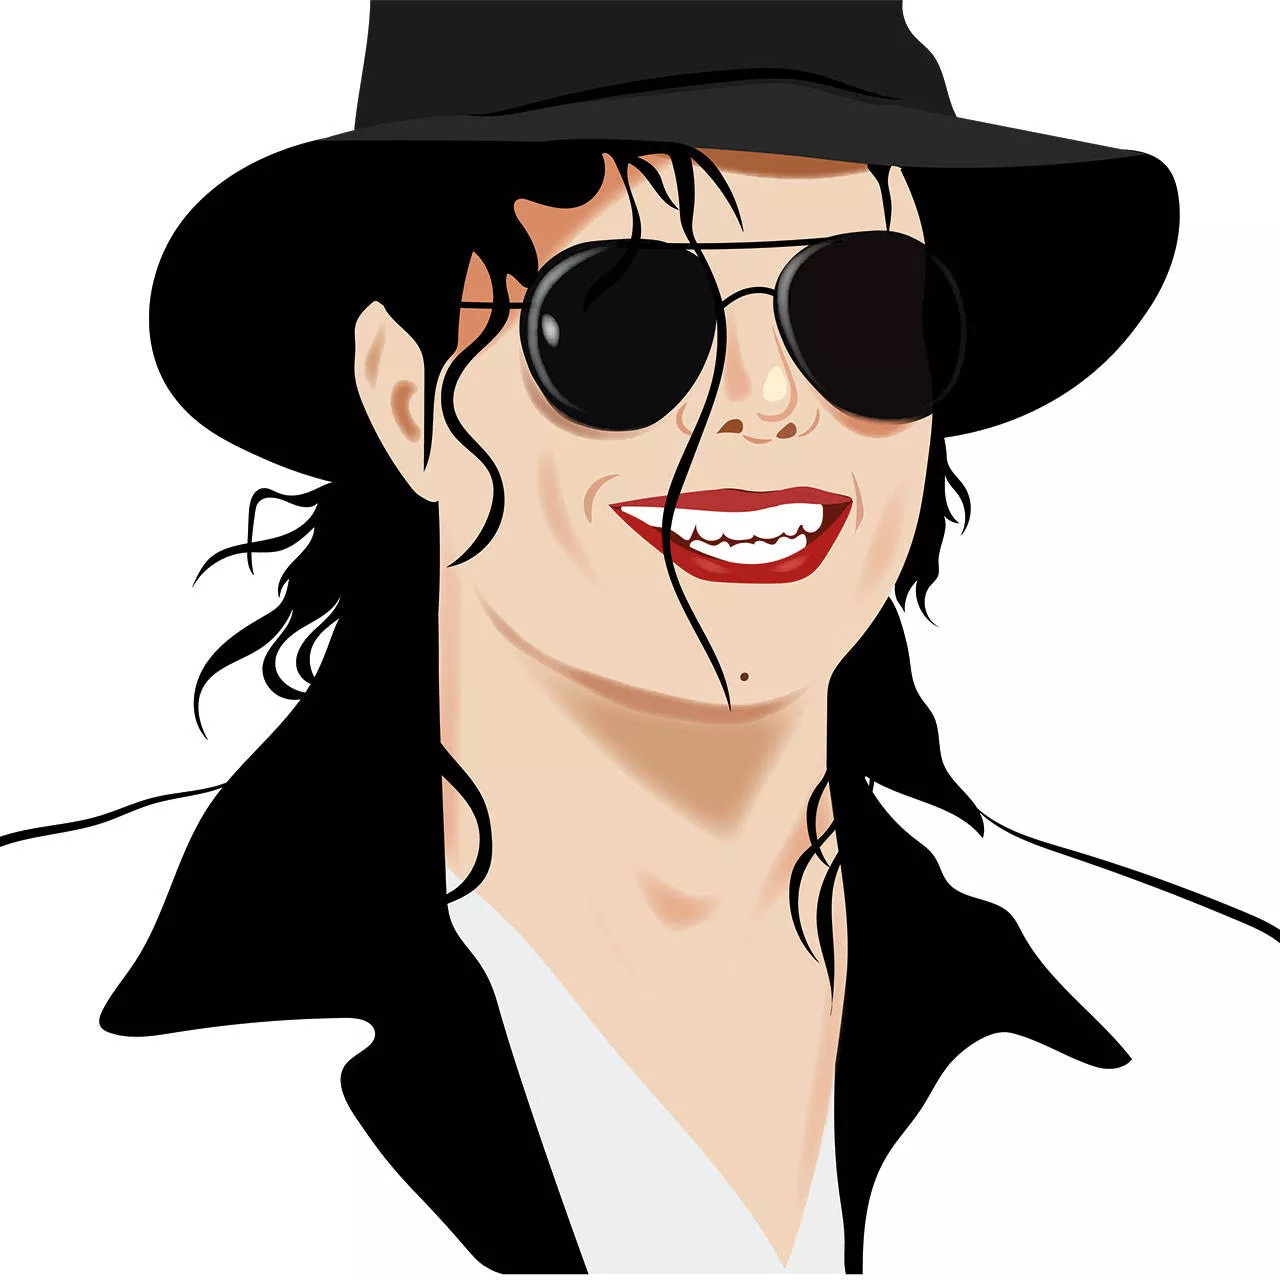 Do you know Michael Jackson?